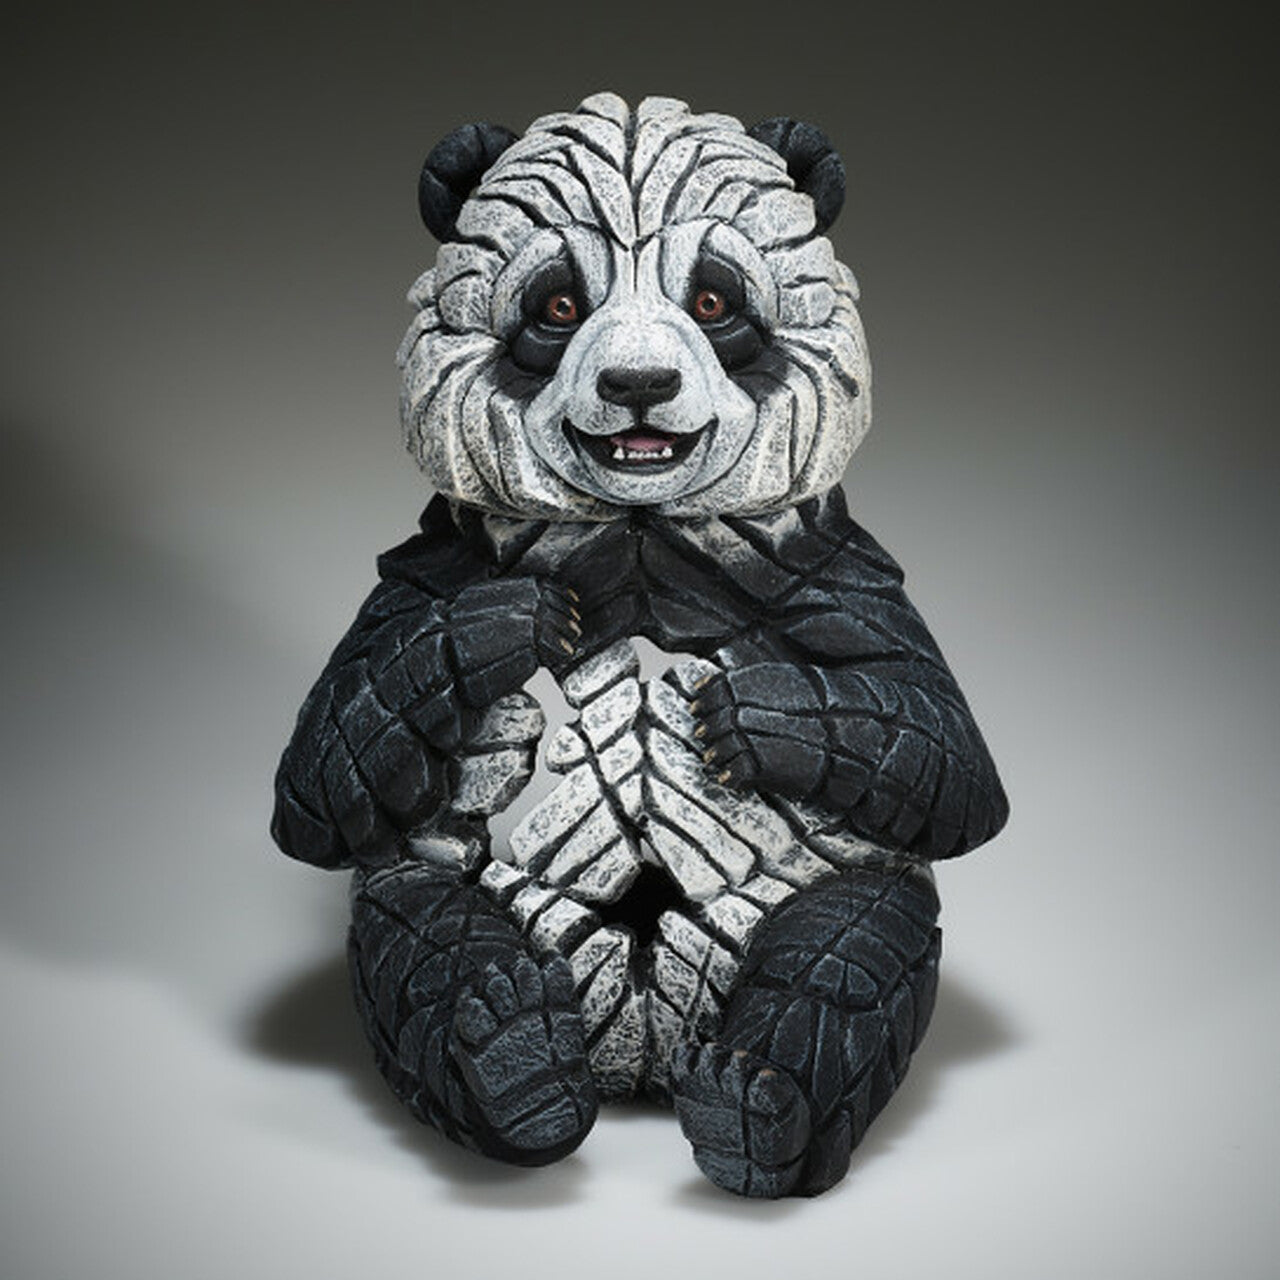 Panda Cub by Matt Buckley from Edge Sculpture